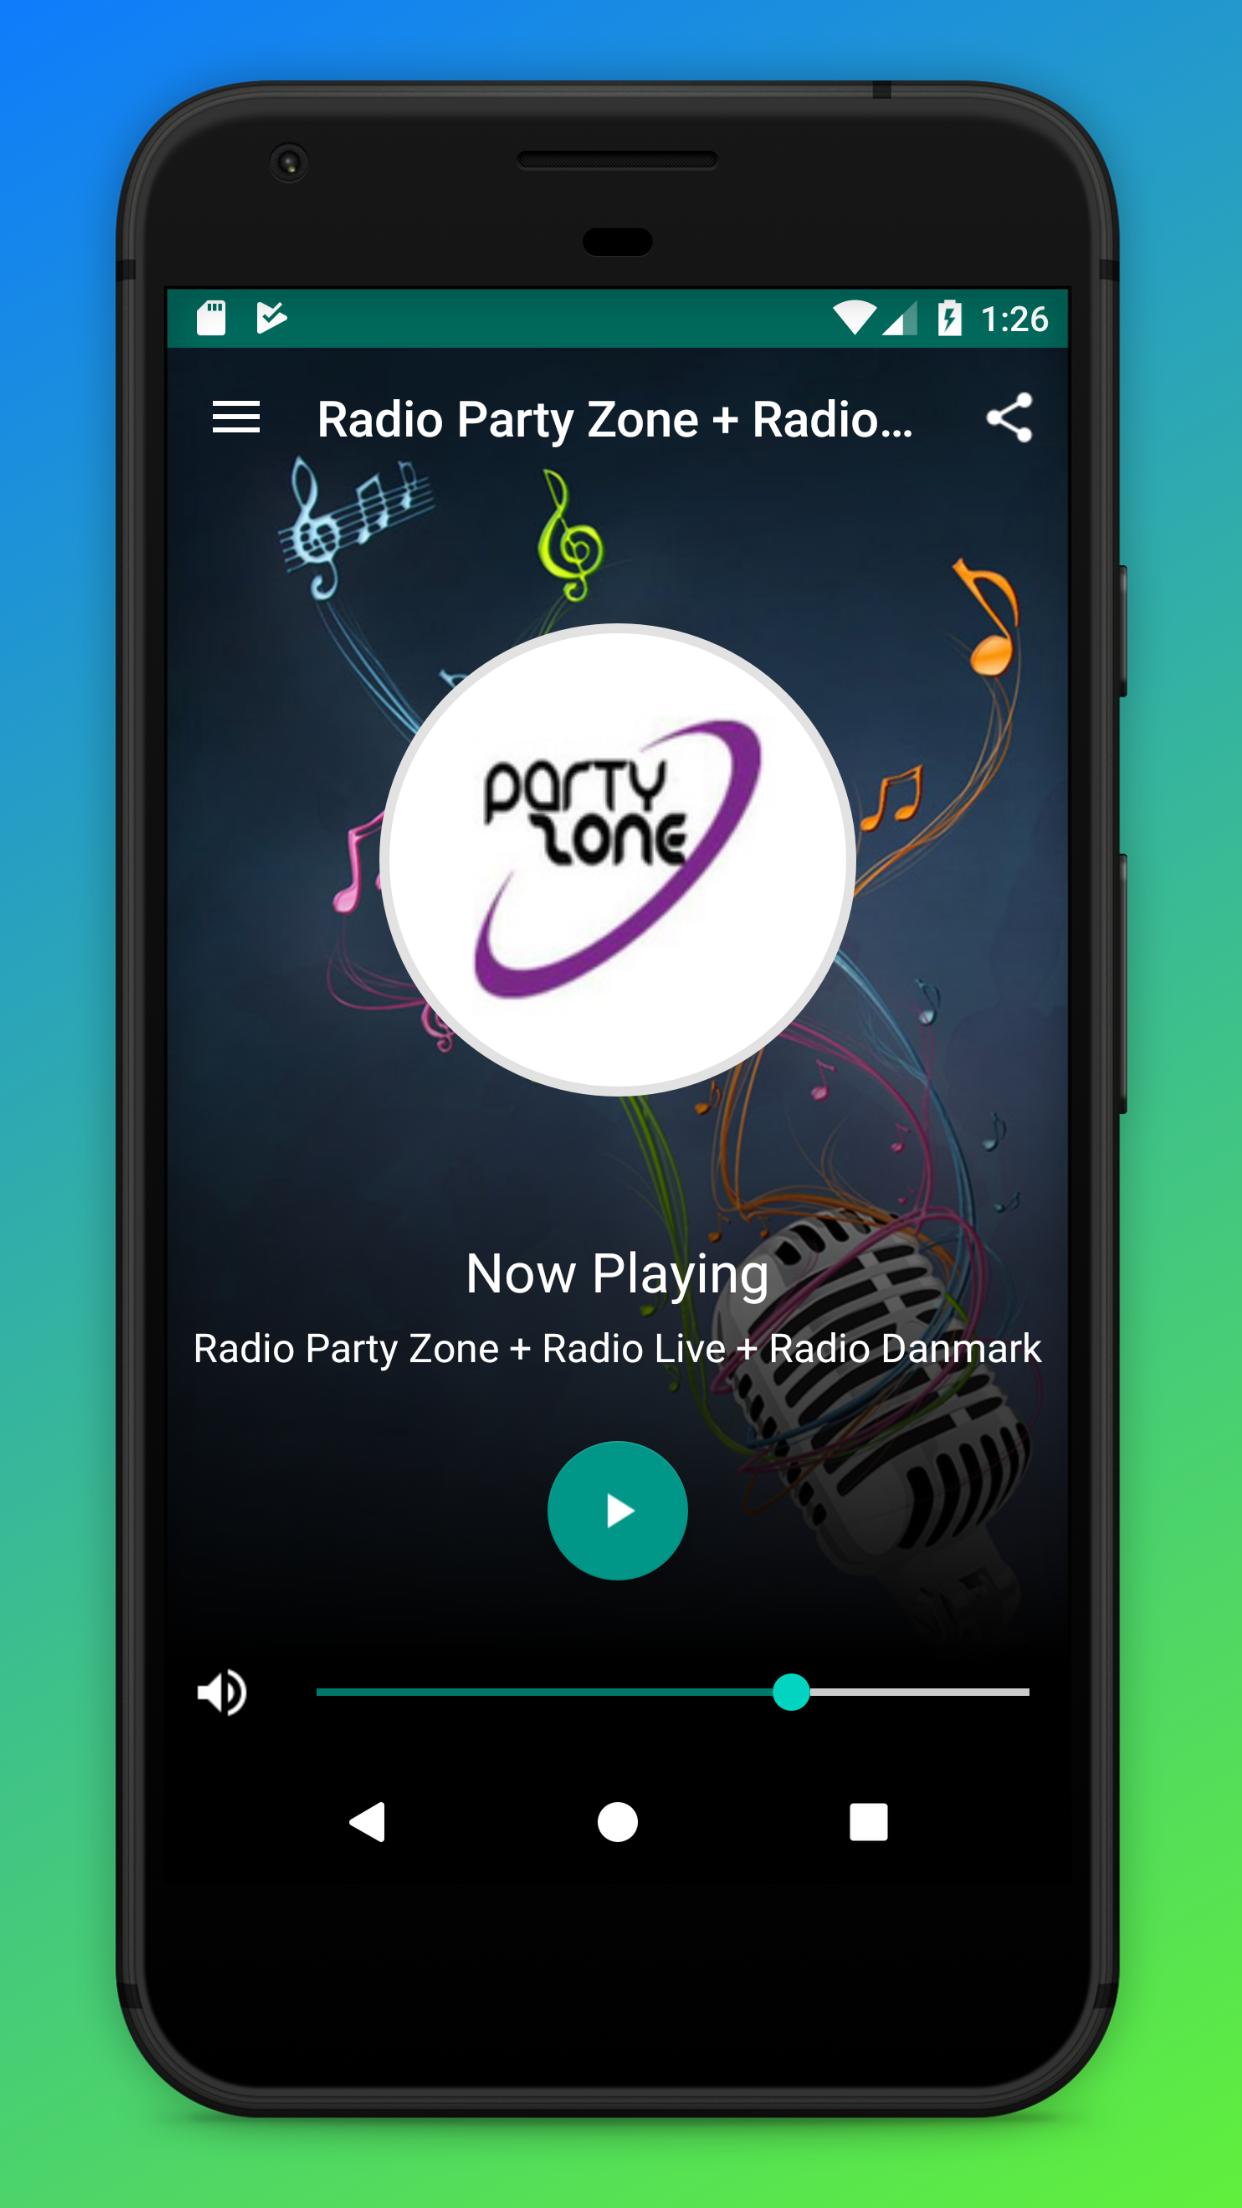 Radio Party Zone + Radio Live + Radio Danmark for Android - APK Download